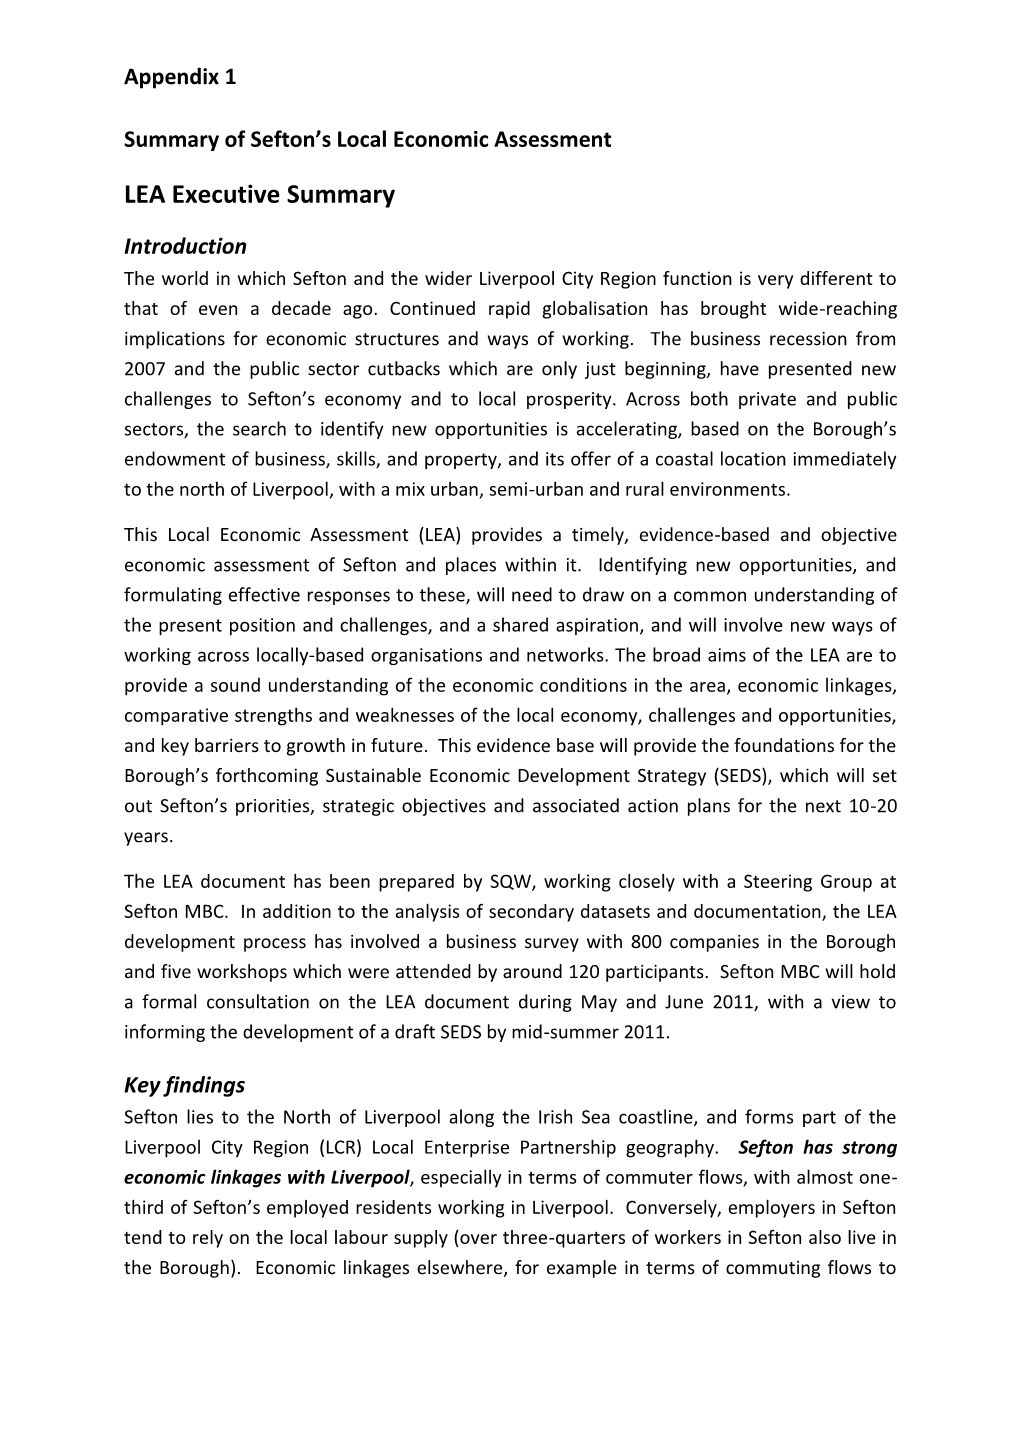 Appendix 1 Summary of Sefton's Local Economic Assessment